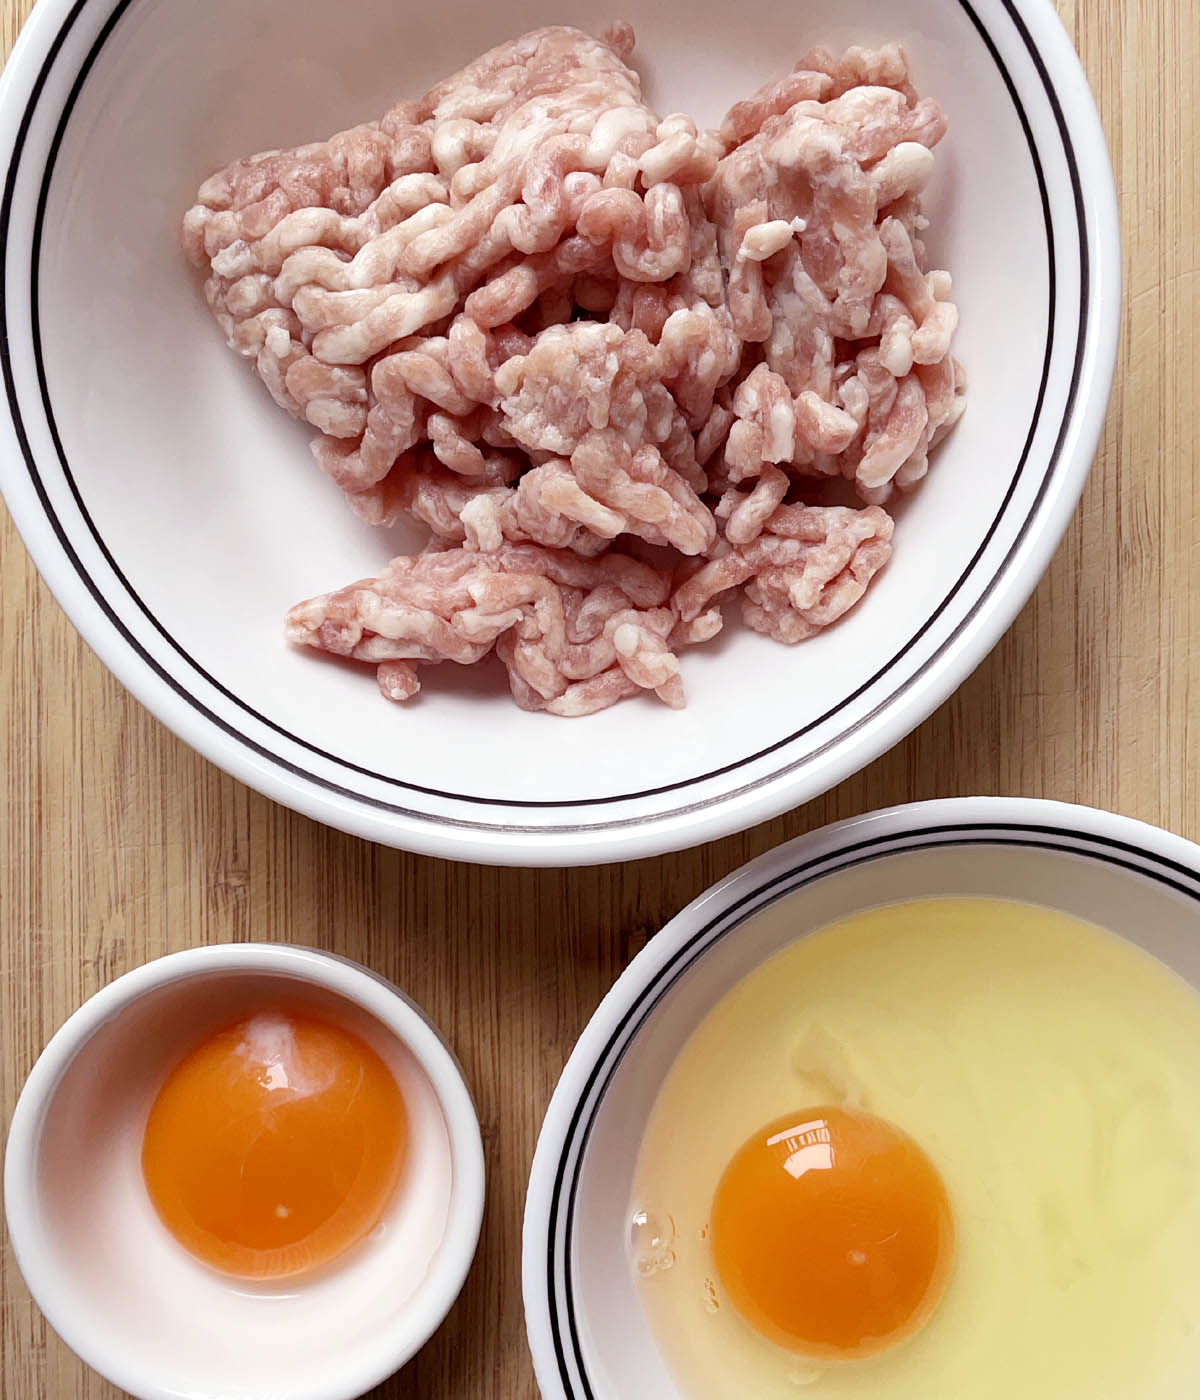 A white bowl containing raw pink ground pork, a white bowl containing an egg yolk, a white bowl containing an egg yolk and egg white.